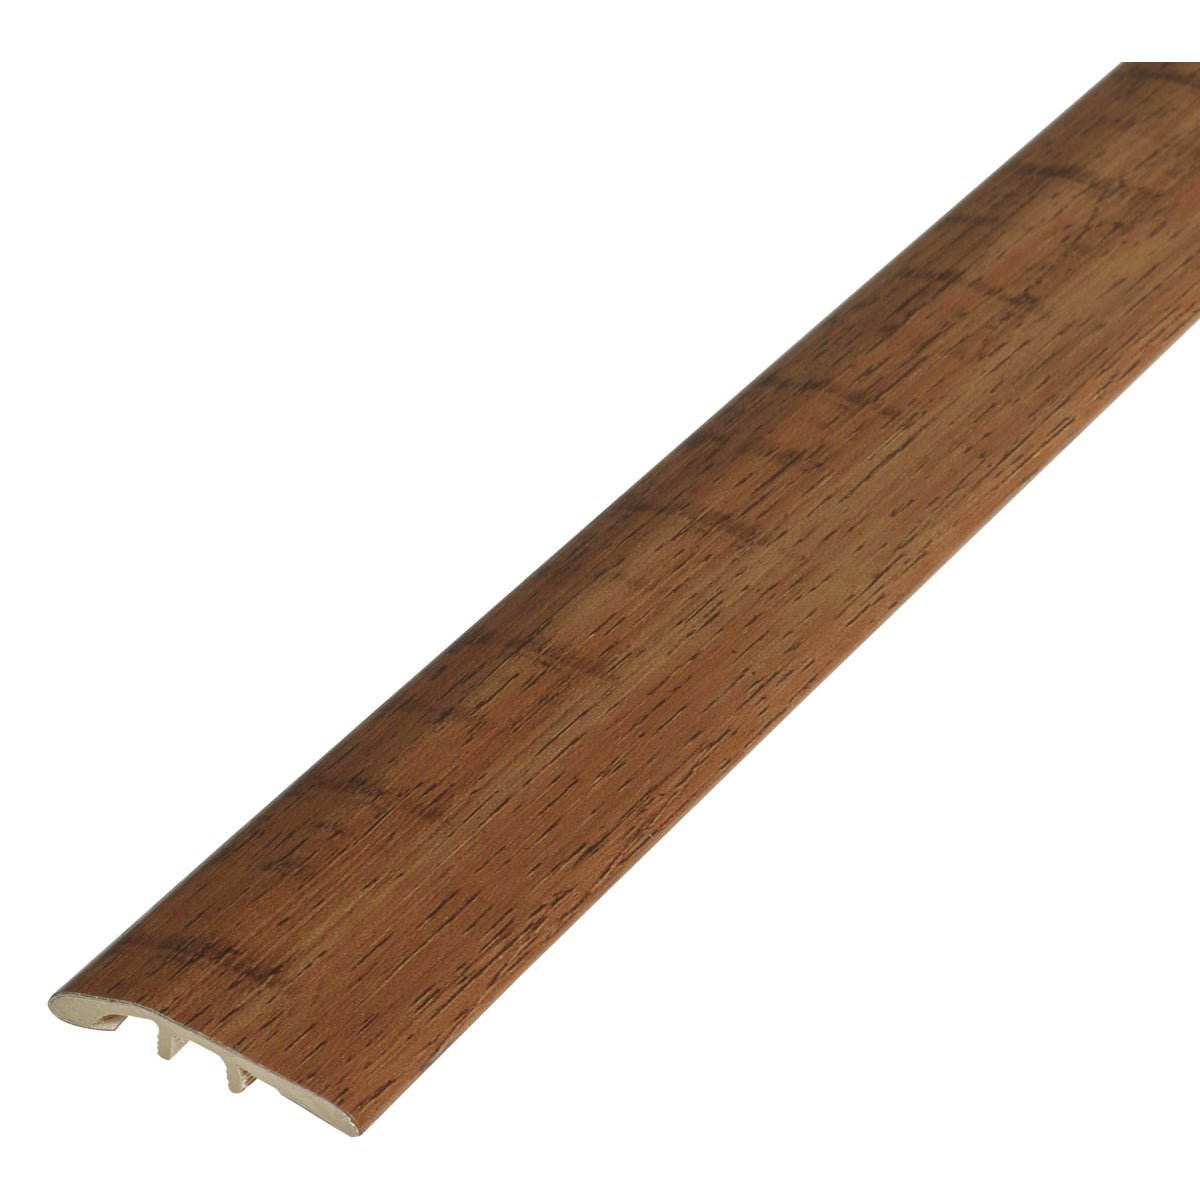 Shaw Endura Smoky Oak 1-3/4 In. W x 72 In. L Multipurpose Reducer Vinyl Floor Plank Trim